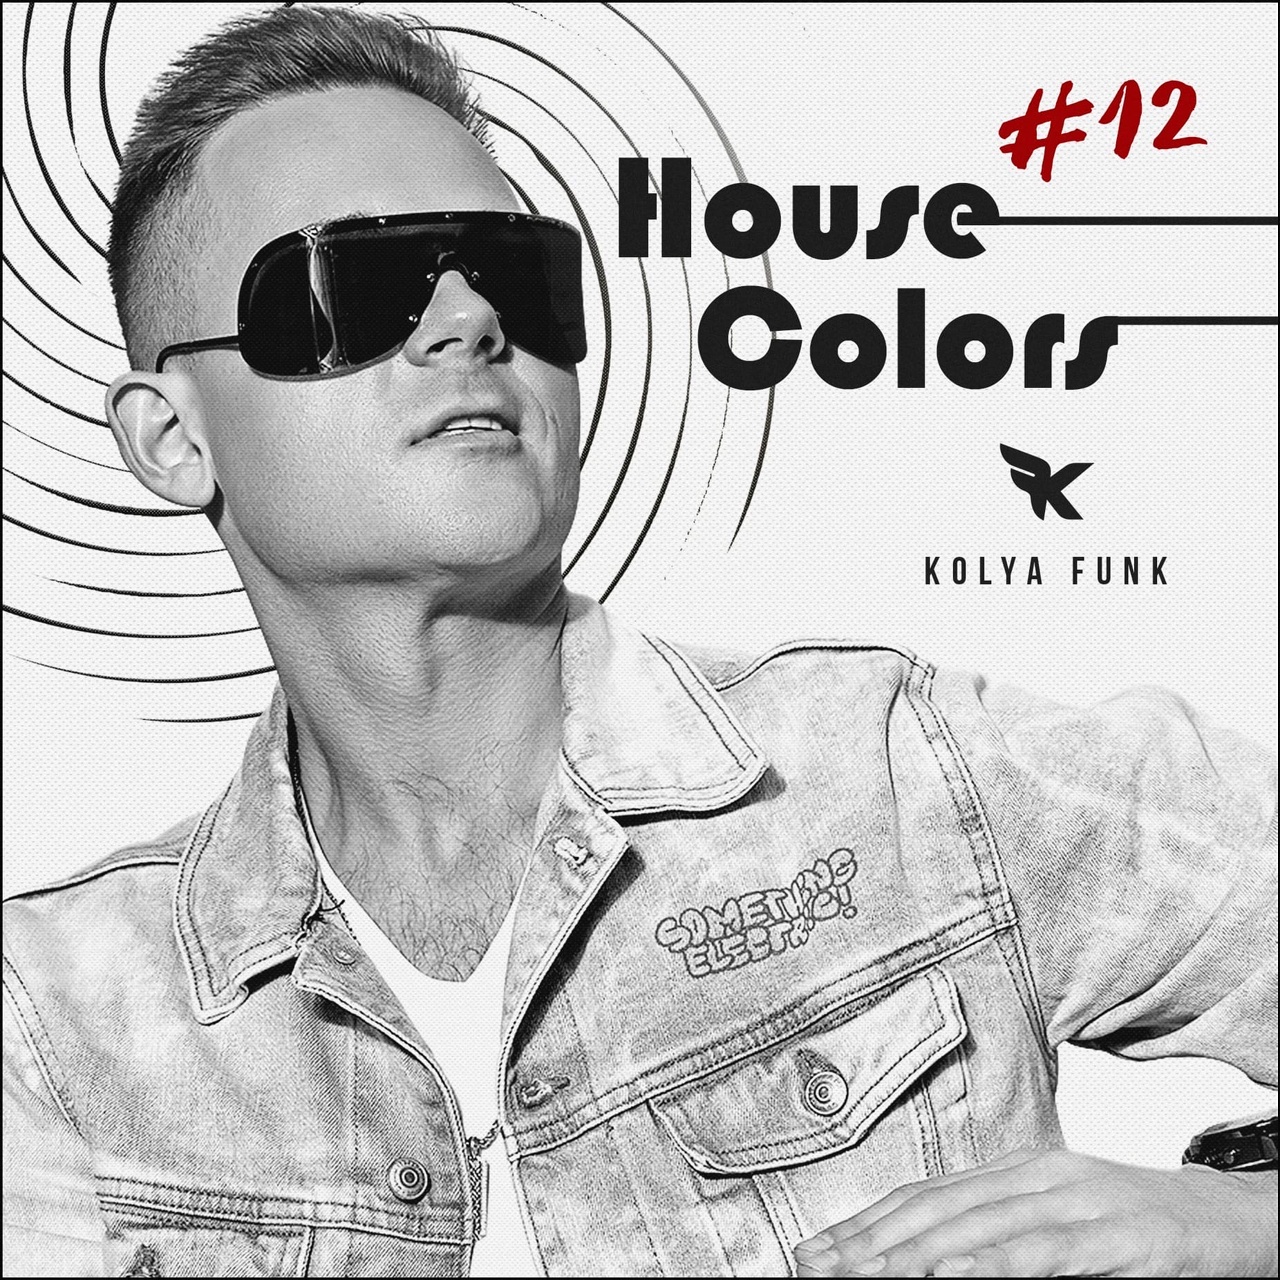 Aflaai Kolya Funk - House Colors #012